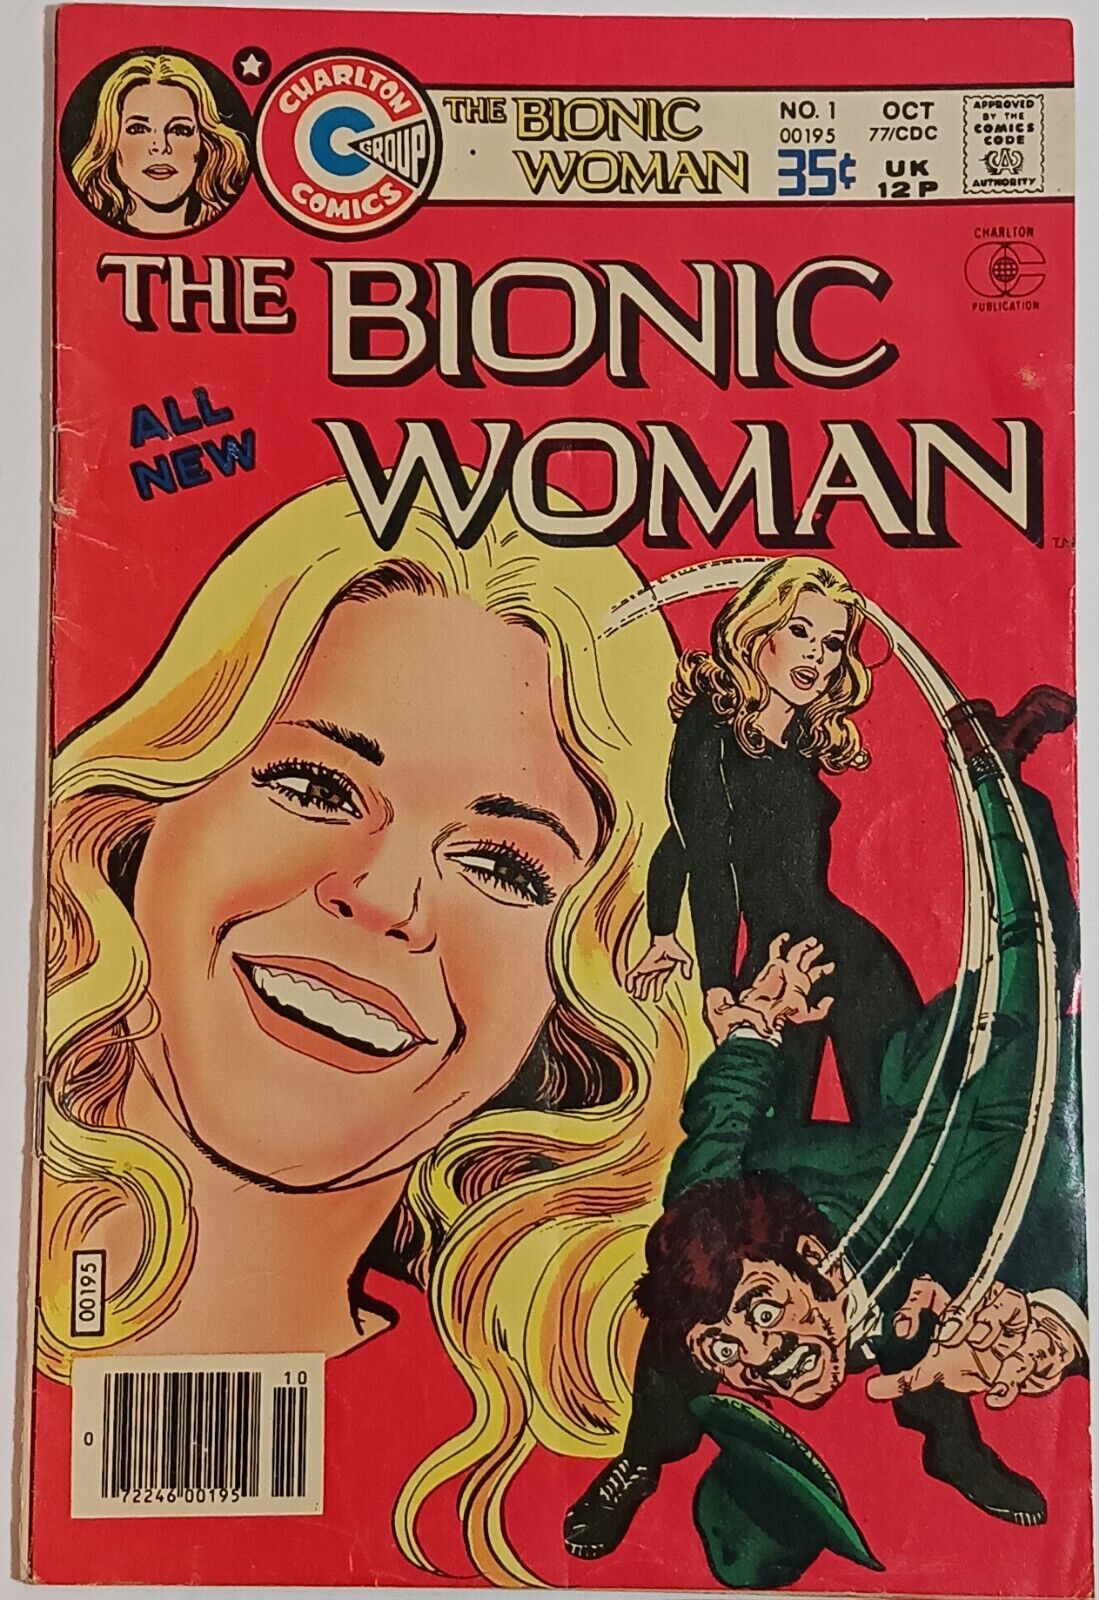 The Bionic Woman #1 Charlton Comics - Oct 1977 Hi-Res Images